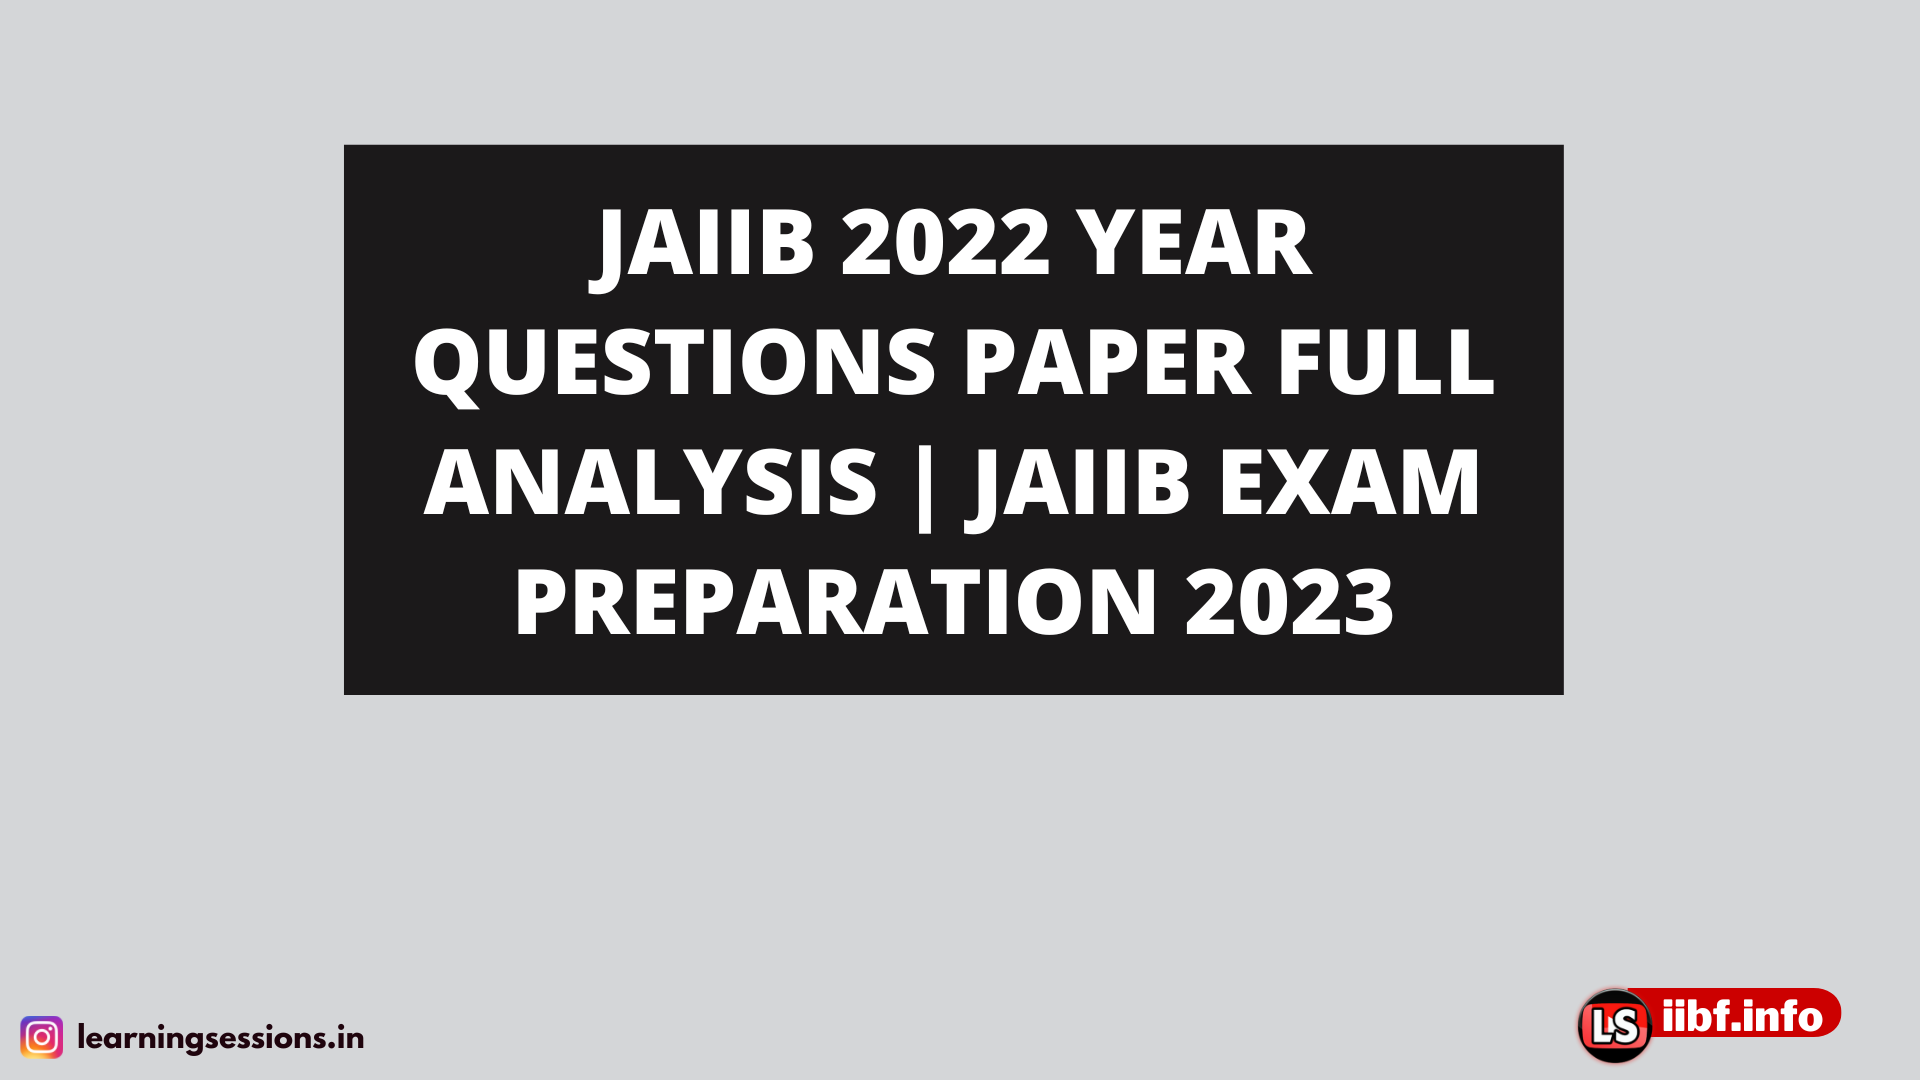 JAIIB 2022 YEAR QUESTIONS PAPER FULL ANALYSIS | CAIIB EXAM PREPARATION 2023